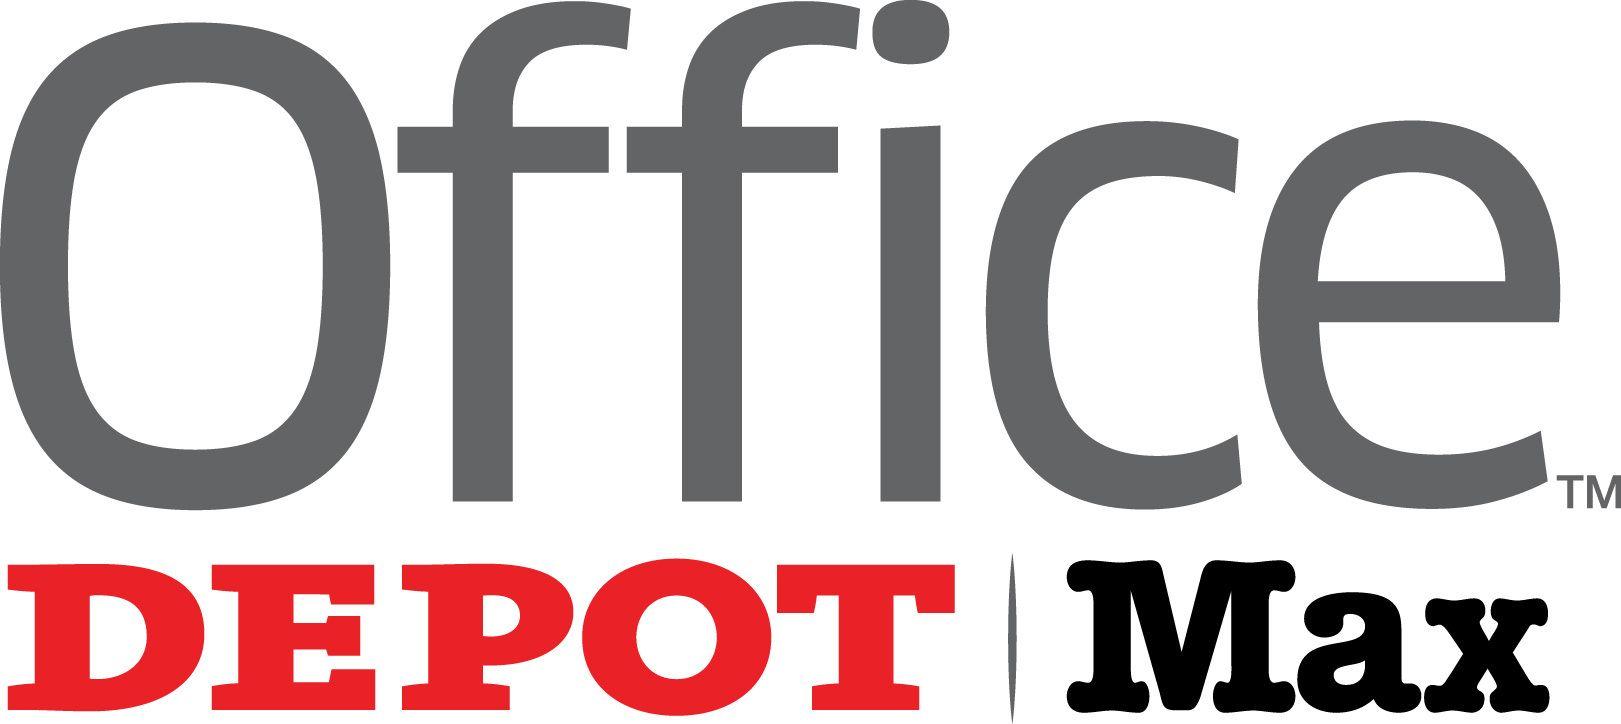 New Office Depot OfficeMax Logo - Office depot Logos